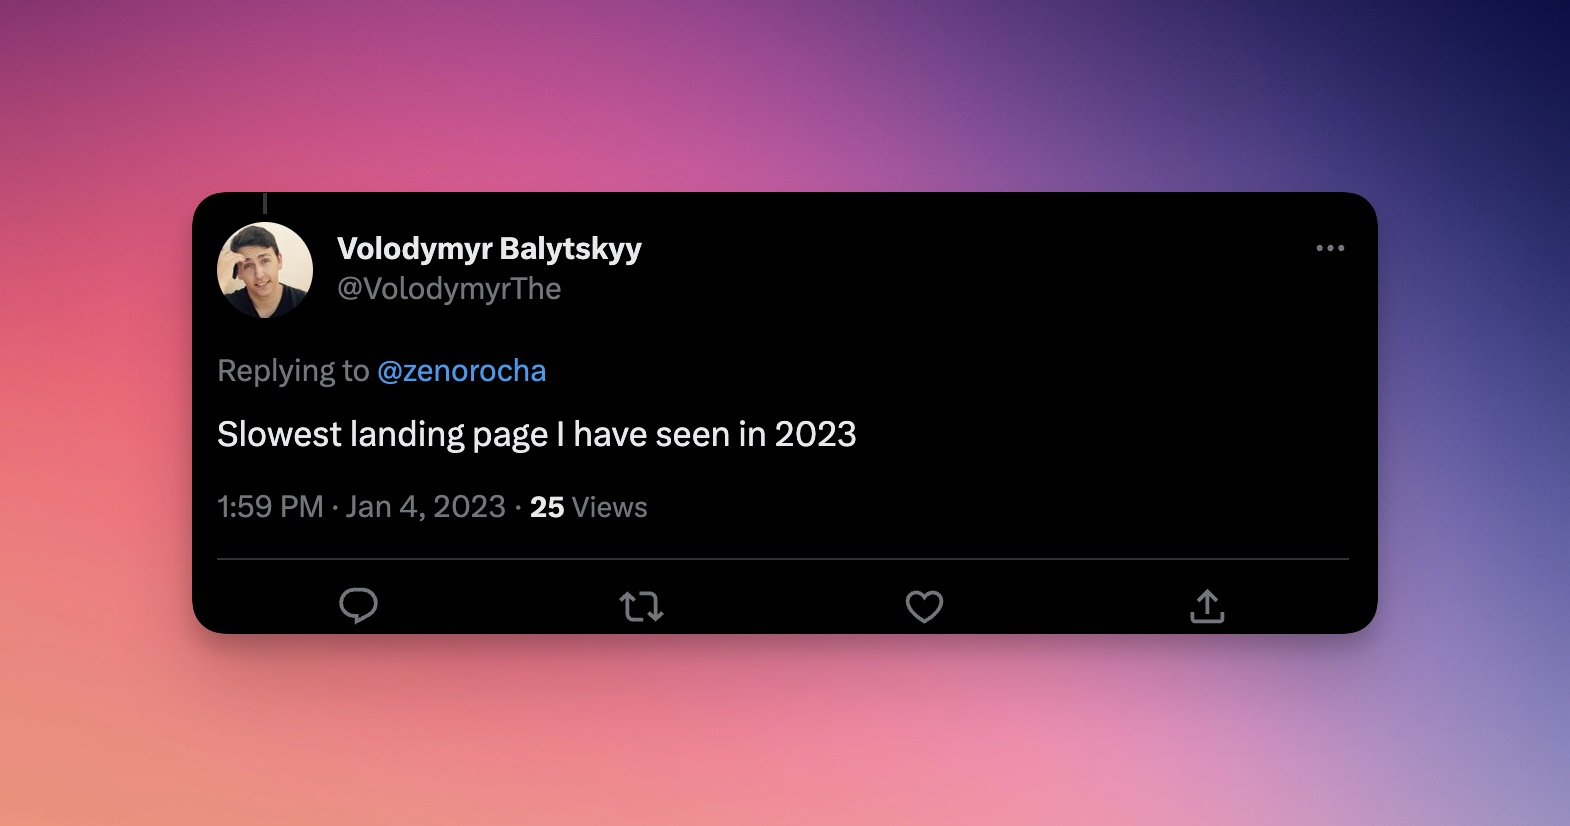 "Slowest landing page I have seen in 2023" Tweet